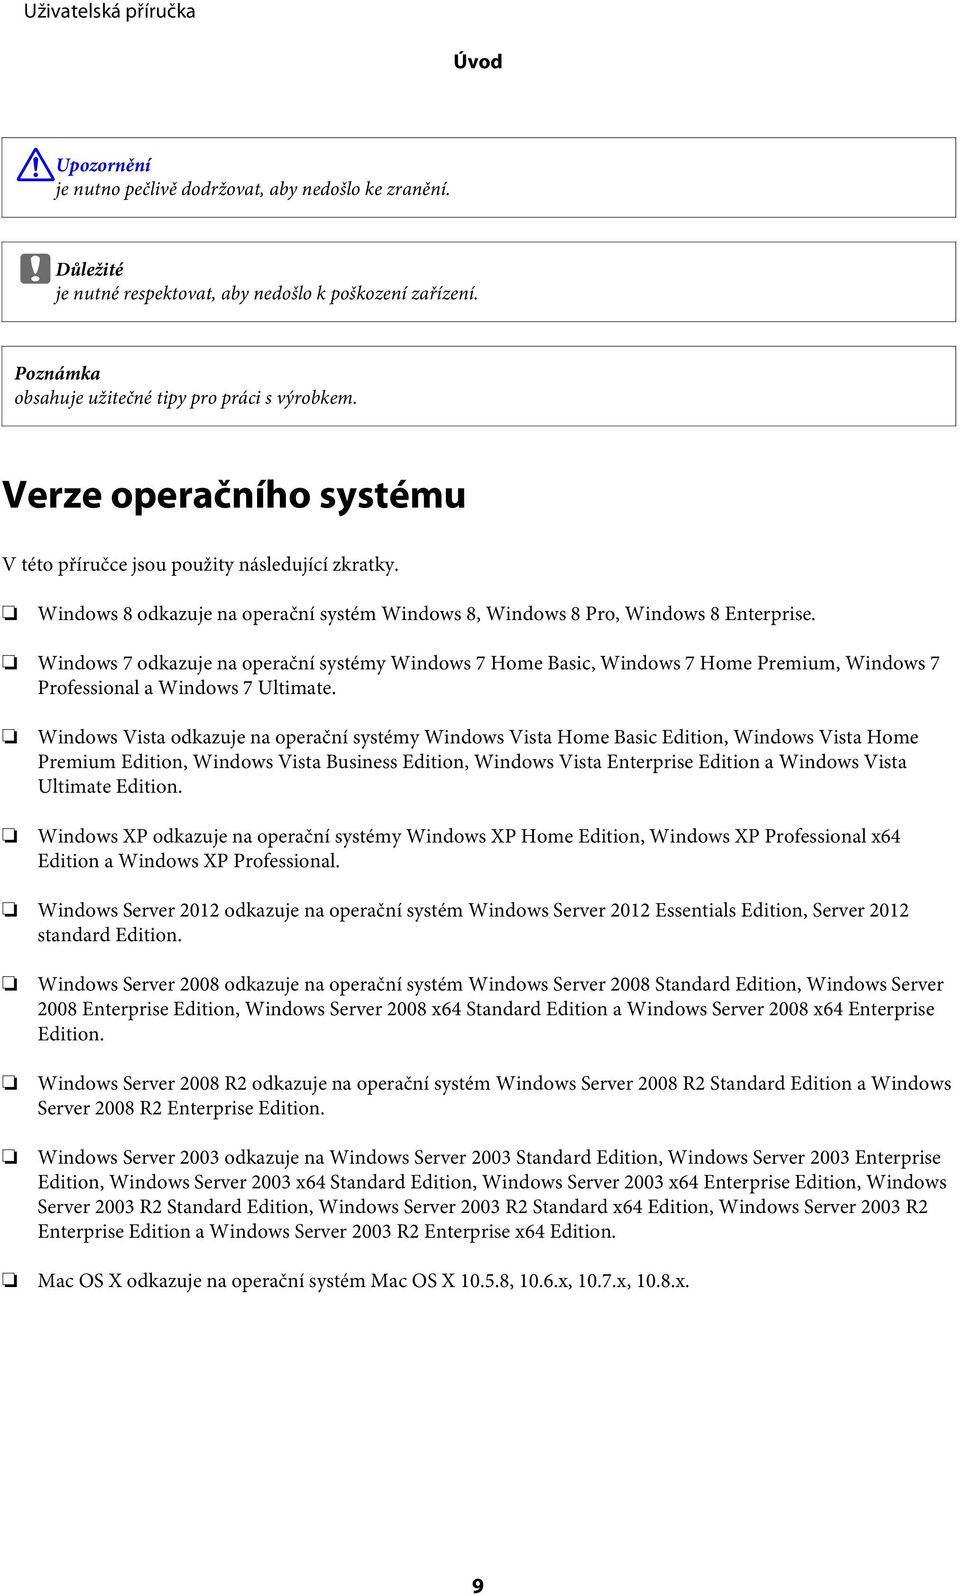 Windows 7 odkazuje na operační systémy Windows 7 Home Basic, Windows 7 Home Premium, Windows 7 Professional a Windows 7 Ultimate.